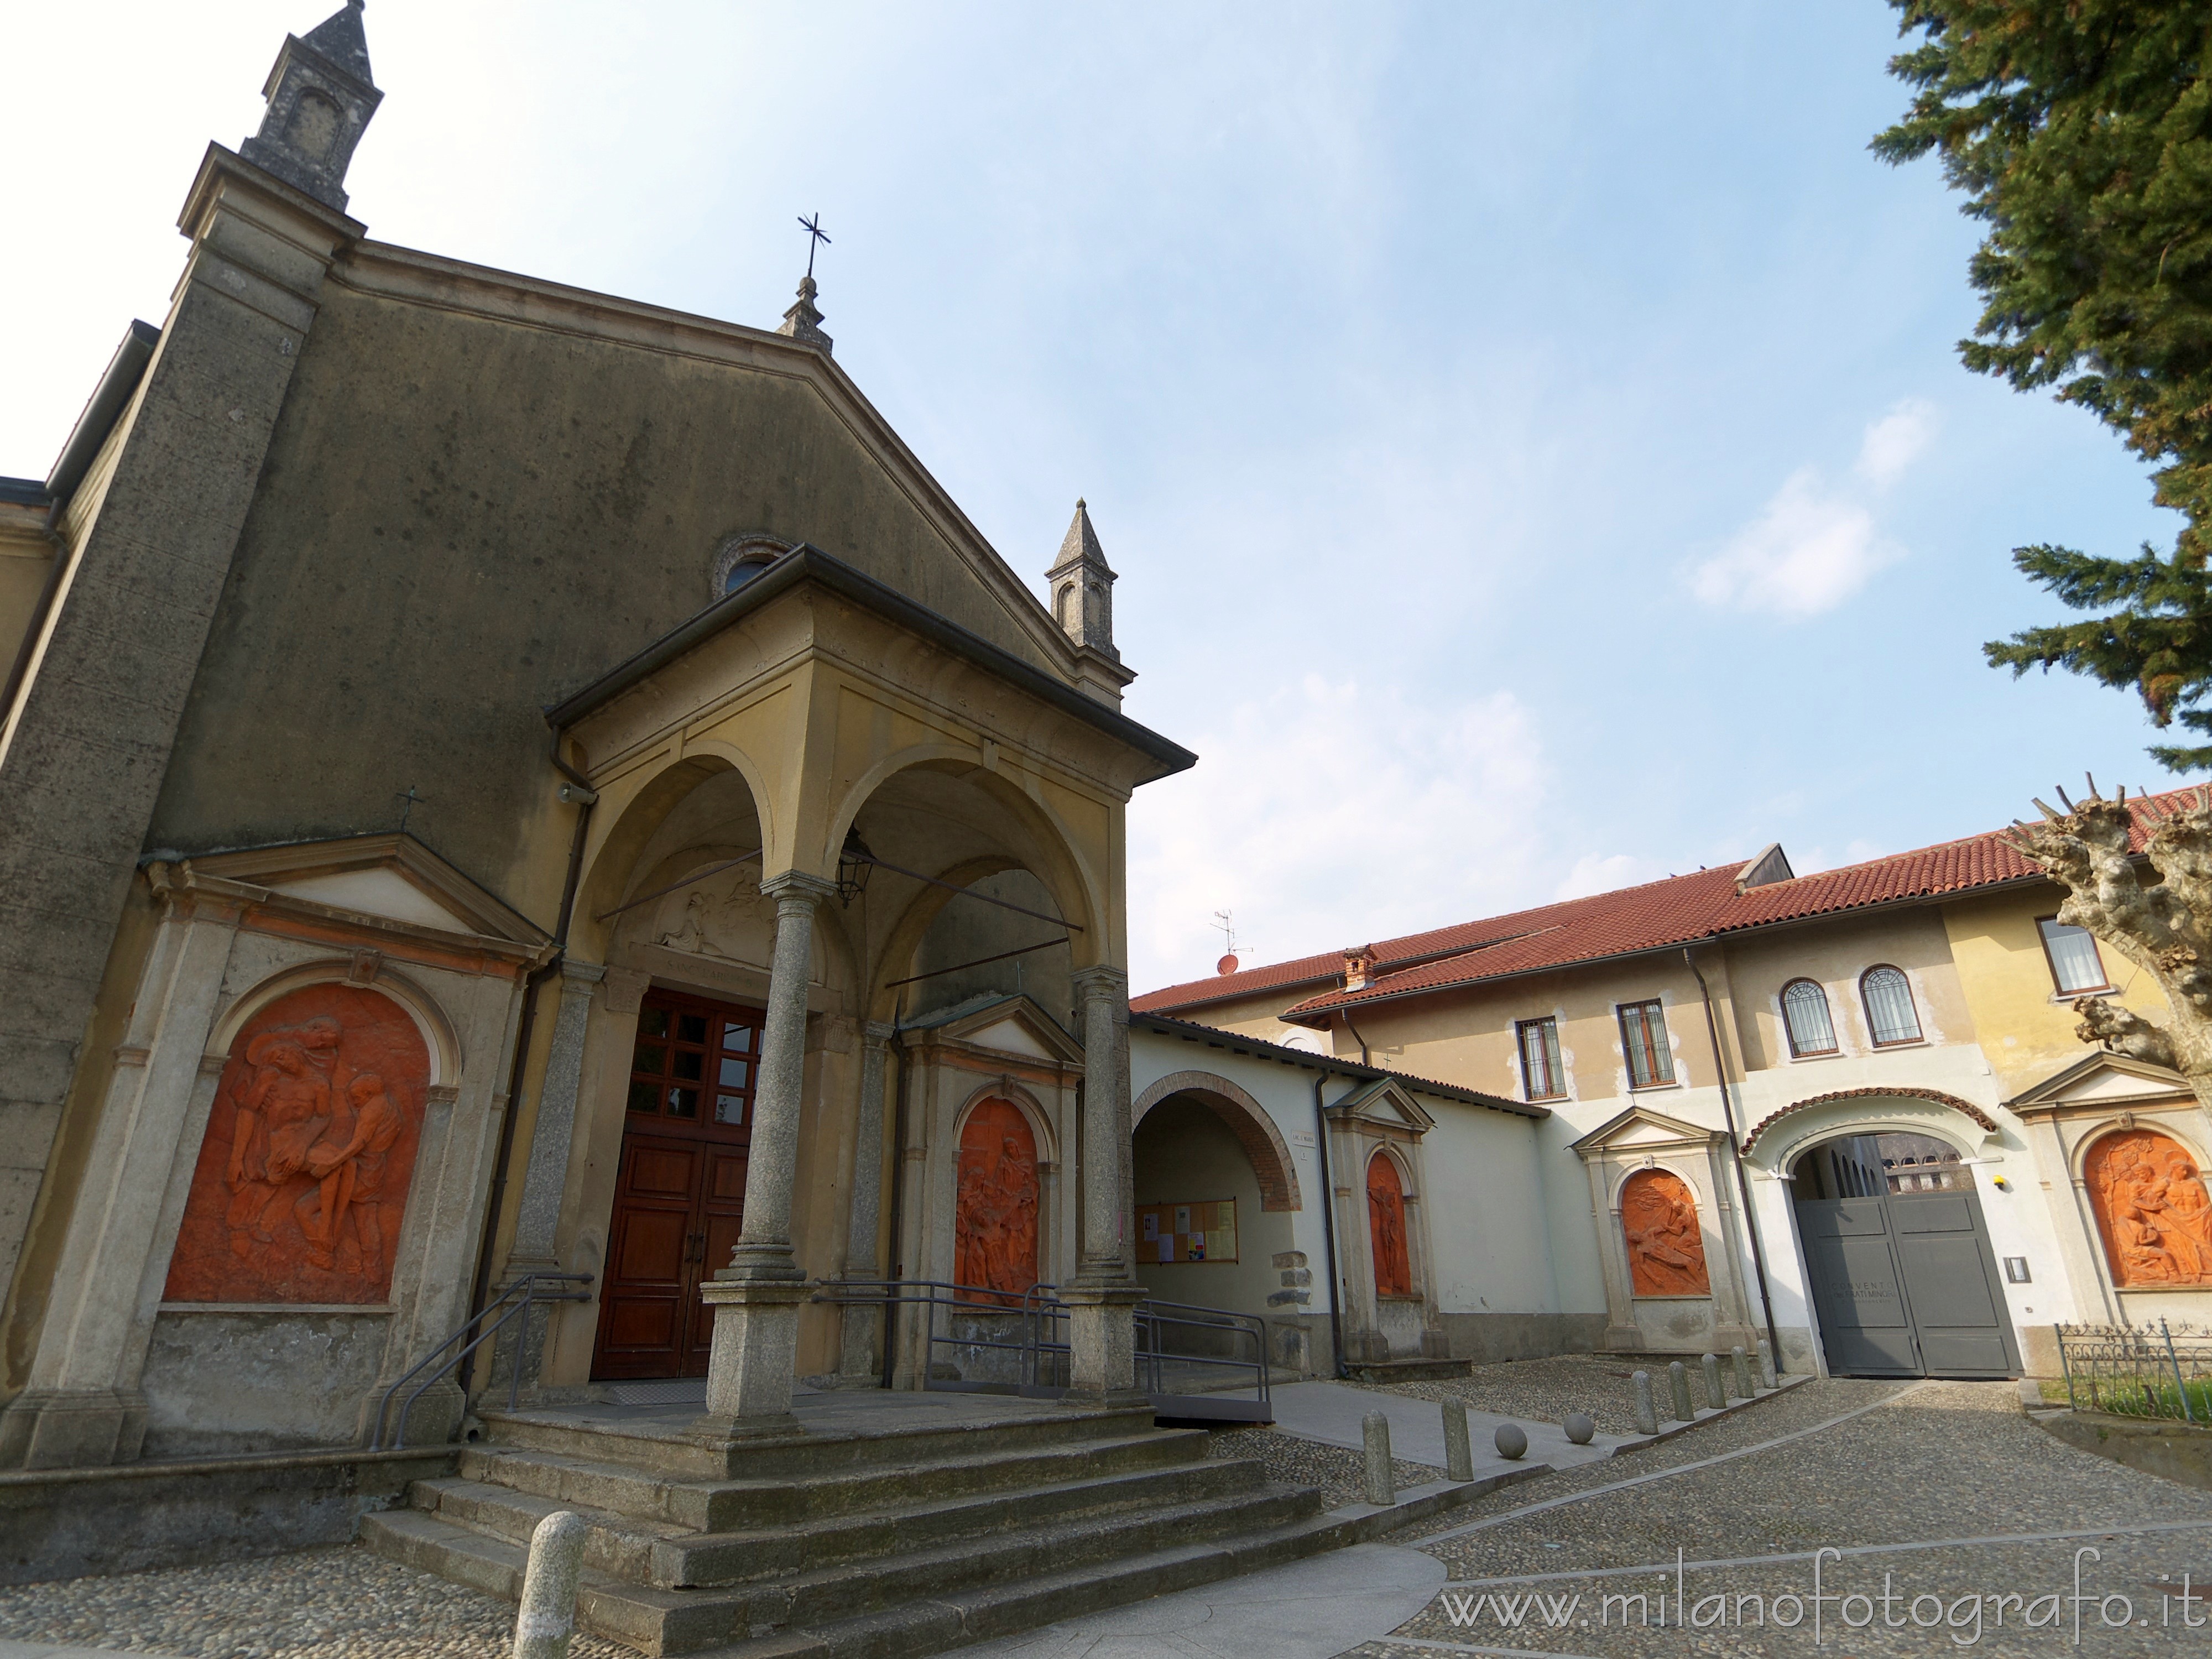 Merate (Lecco, Italy): Convent of Sabbioncello - Merate (Lecco, Italy)